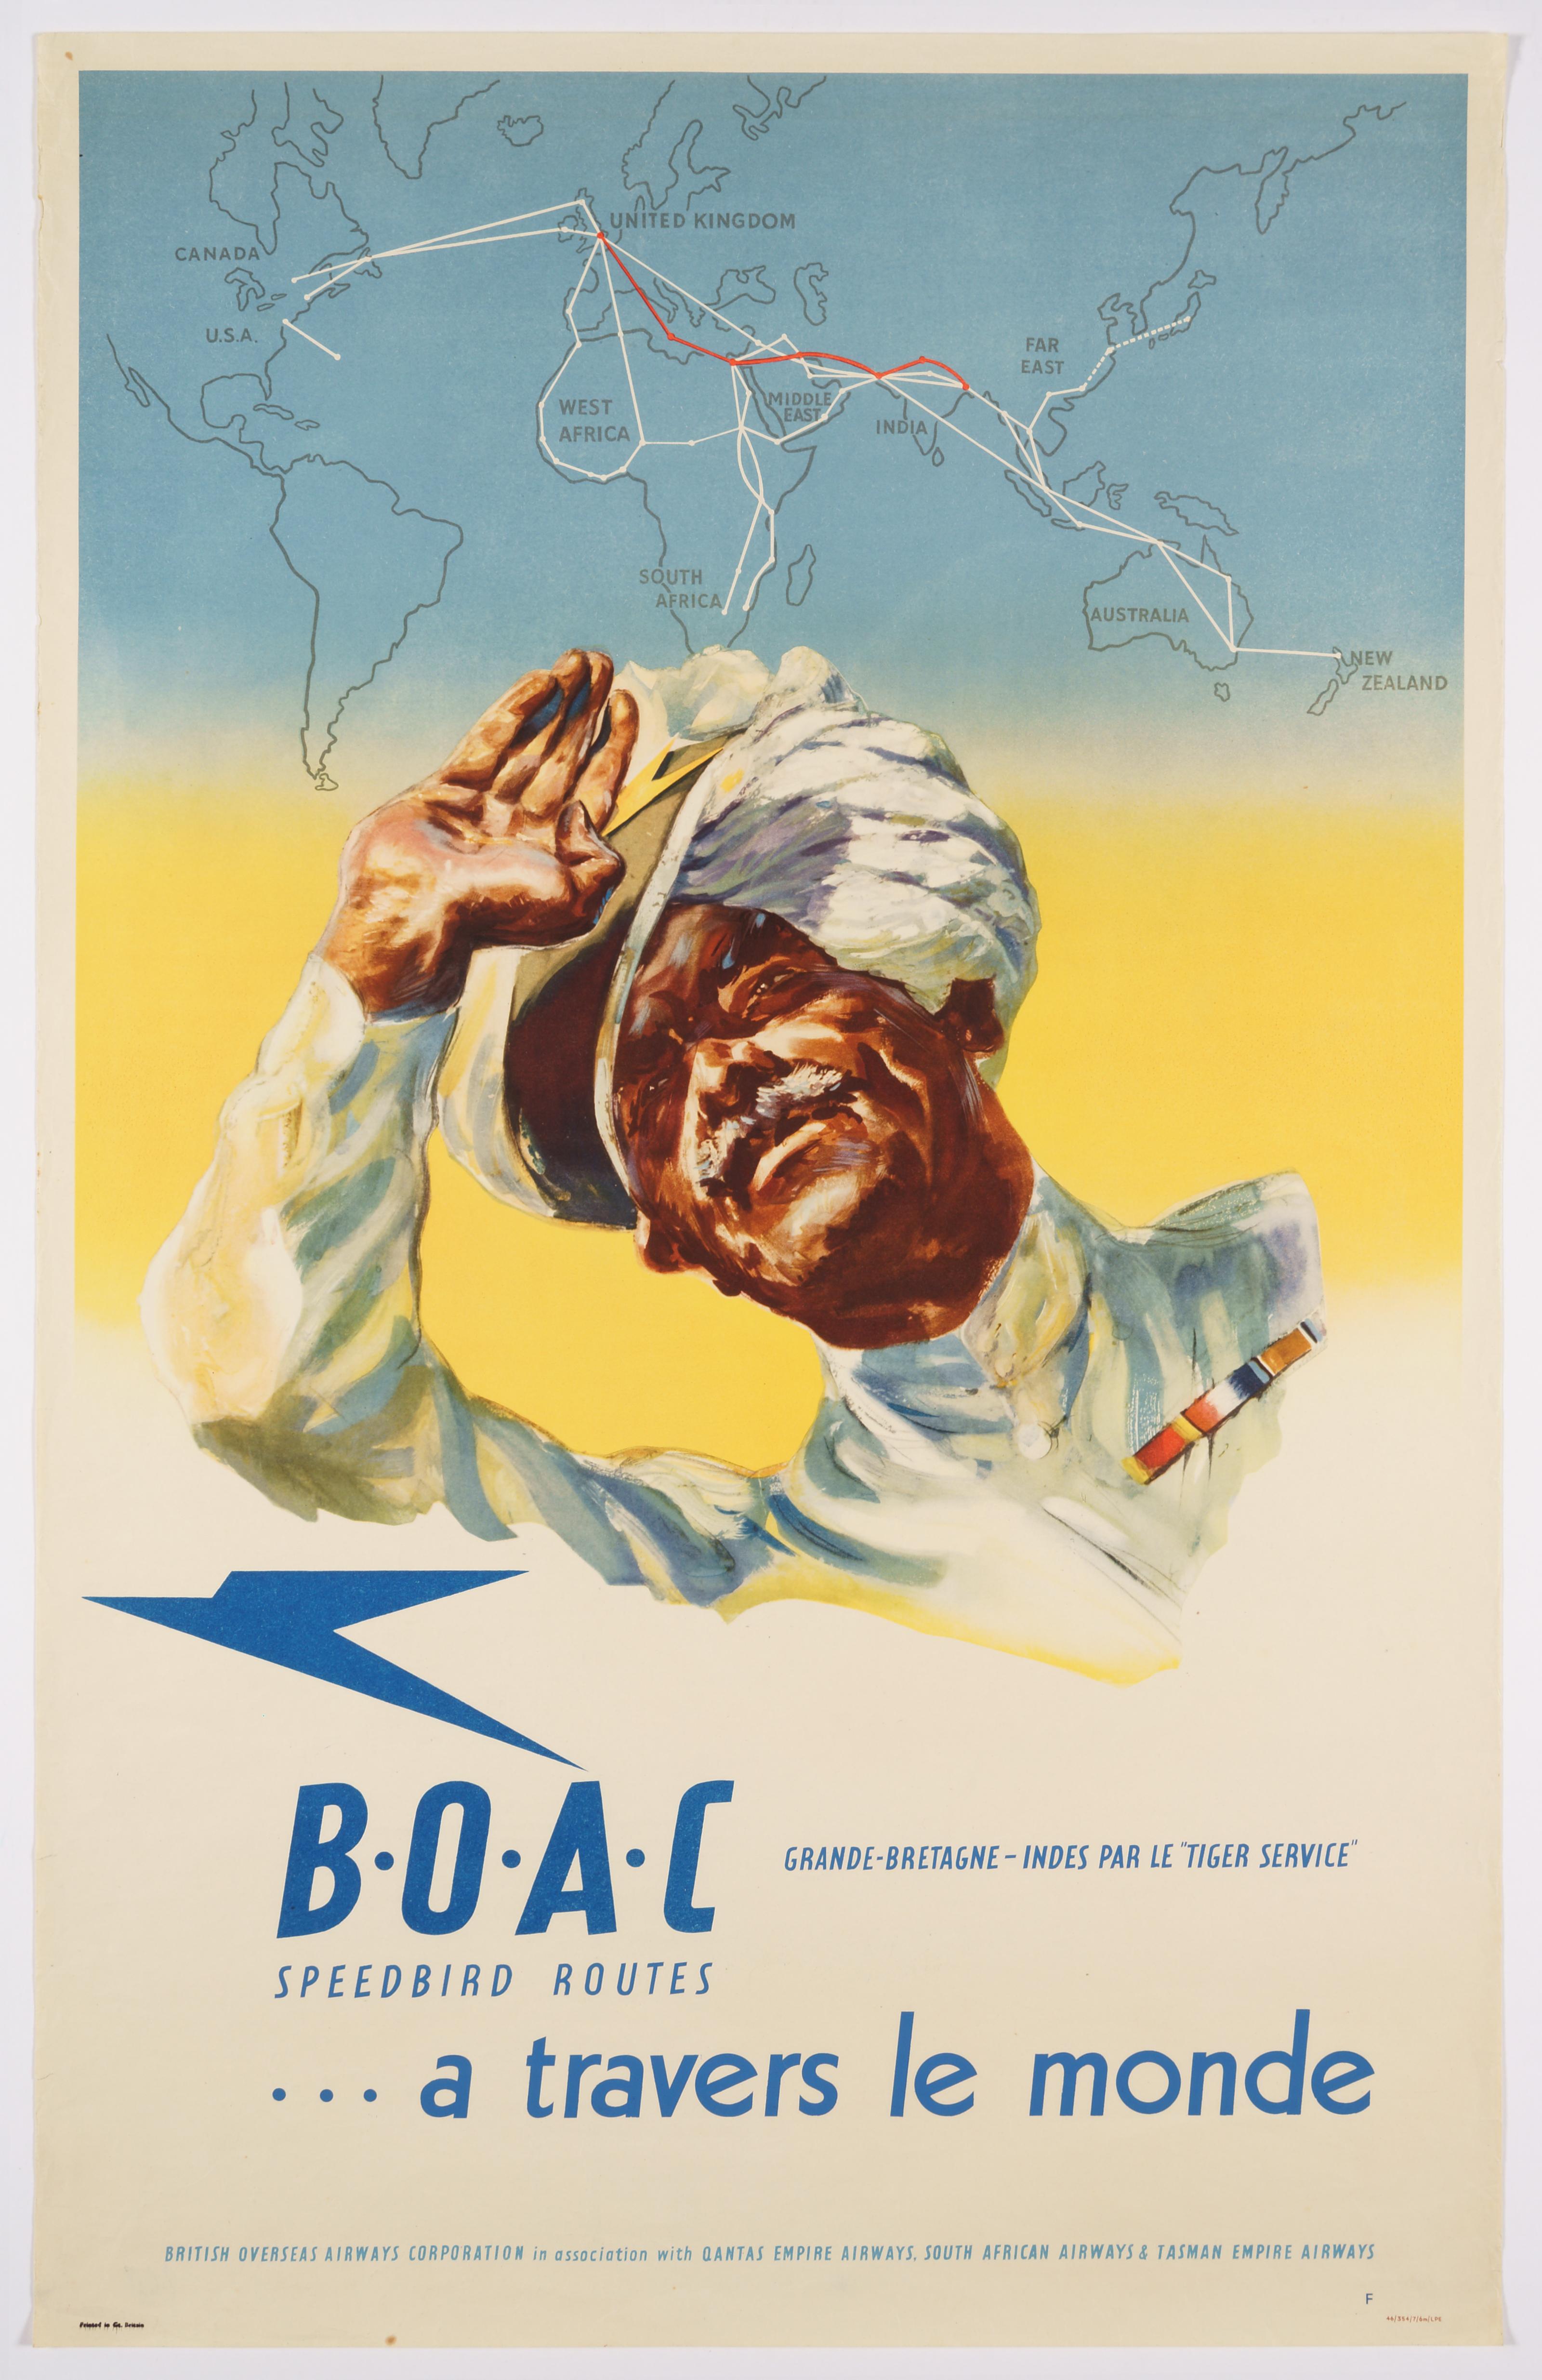 BOAC Speedbird Routes Across the World – Original Vintage British Airline Poster